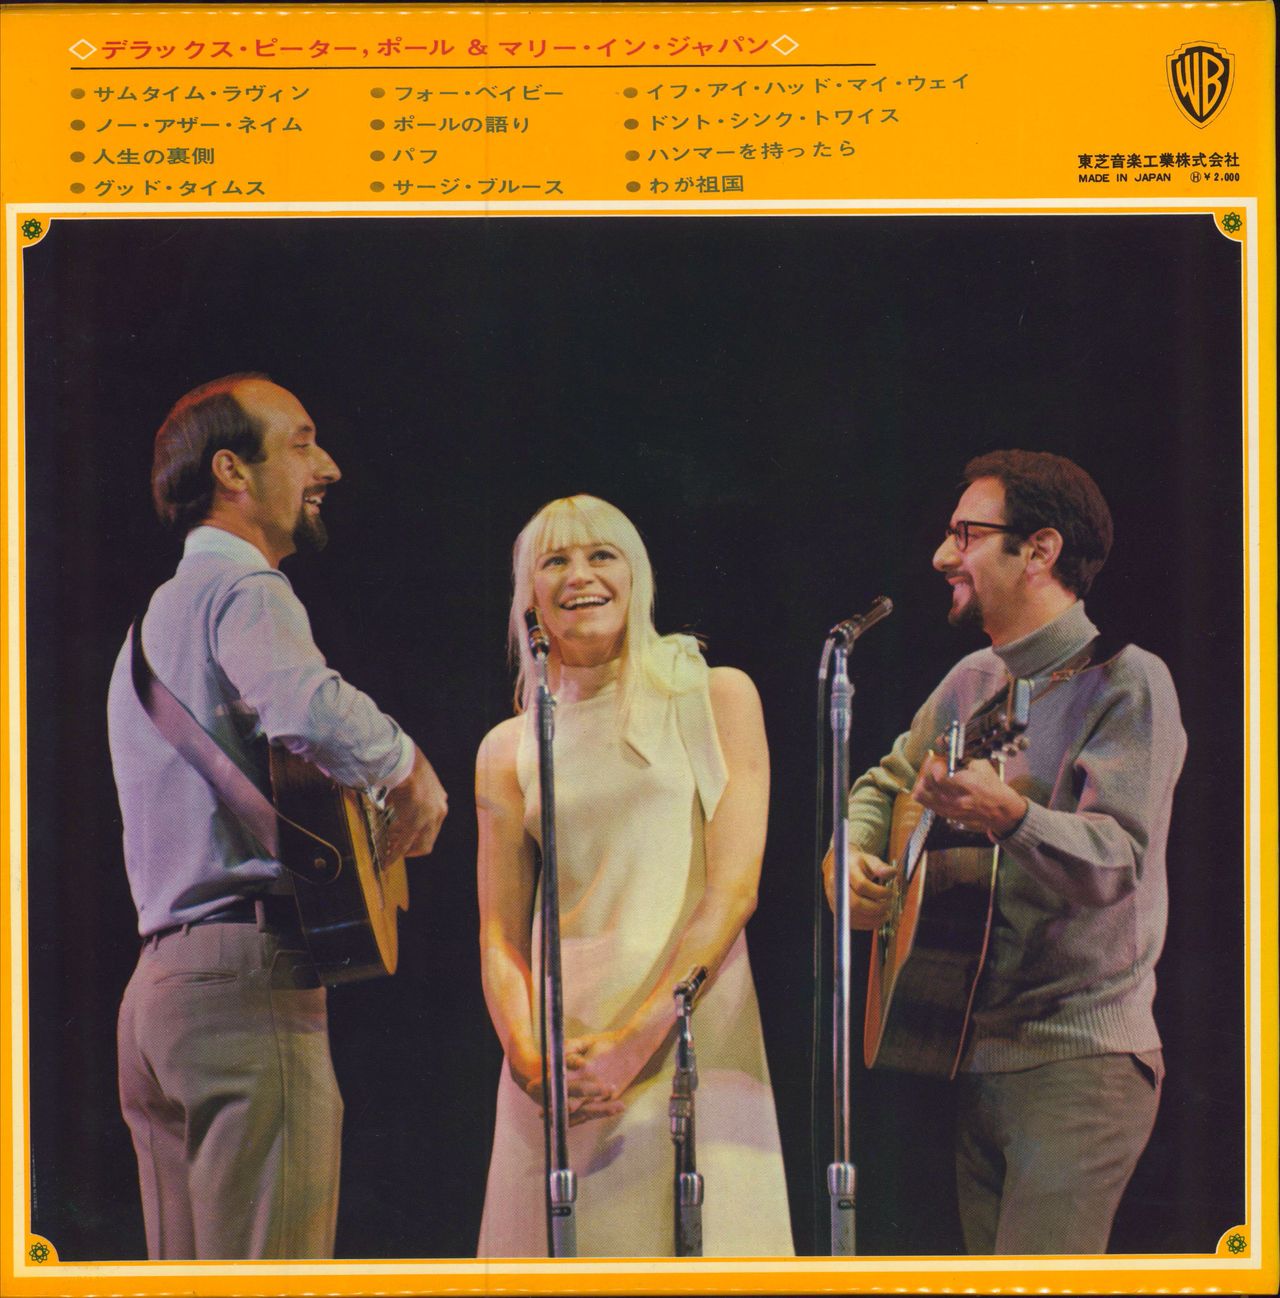 Peter Paul & Mary Deluxe / Peter, Paul & Mary In Japan - Red Vinyl Japanese vinyl LP album (LP record)